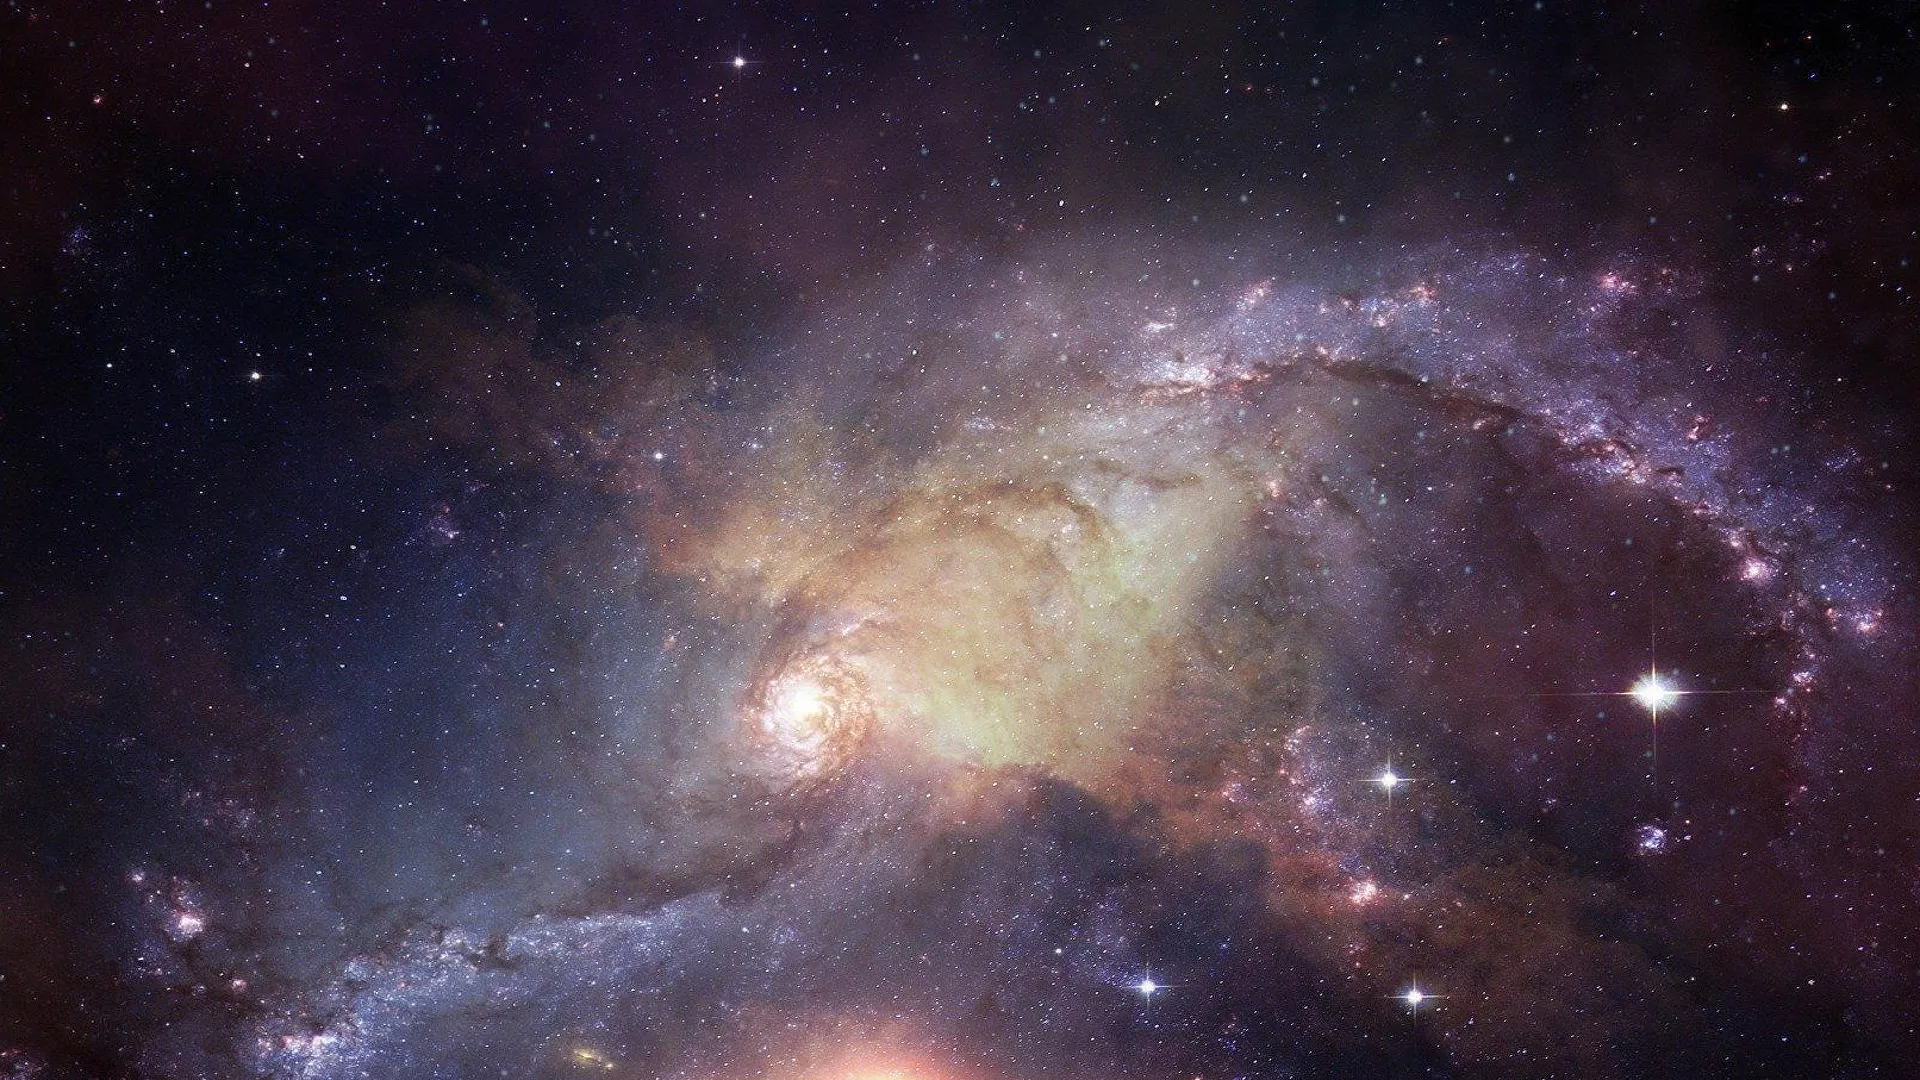  El Hubble capta una espectacular imagen de tres galaxias que ‘se destrozan’ entre sí | Foto